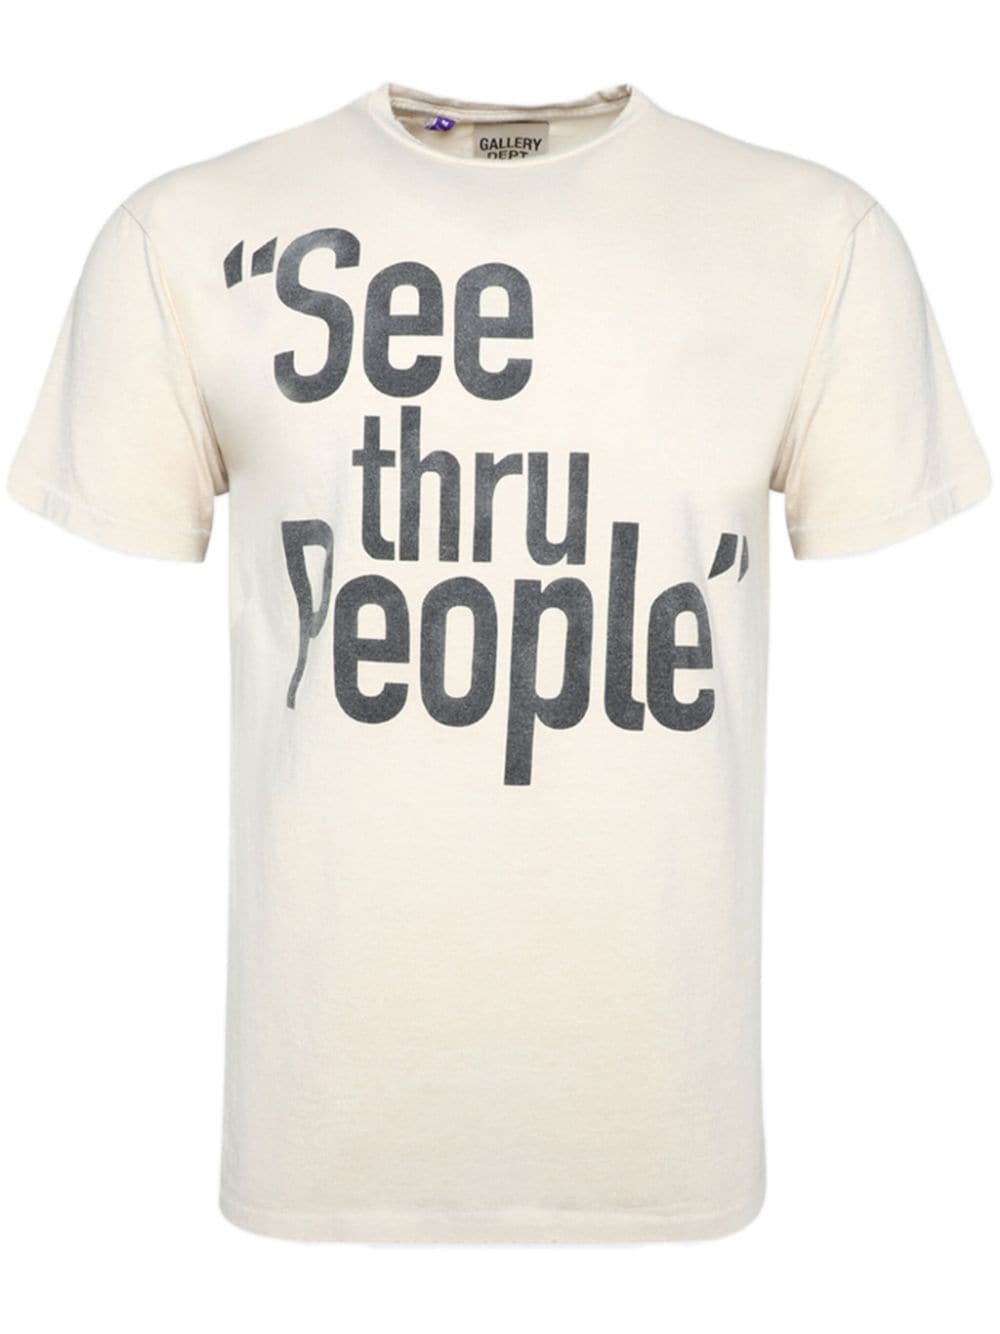 text-print cotton T-shirt - 1